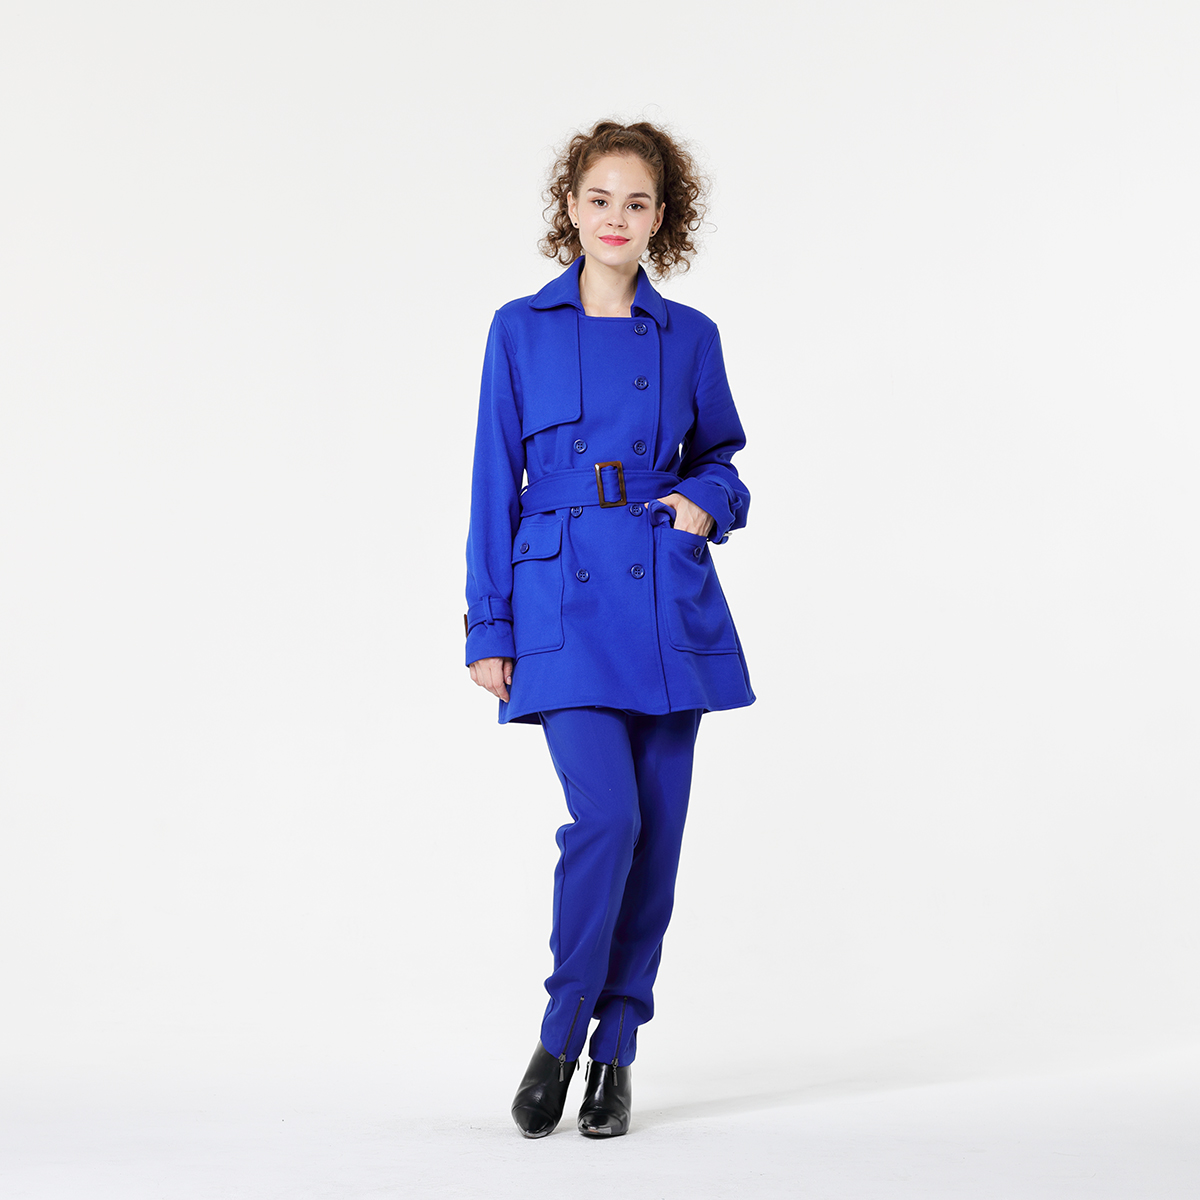 Royar blue Lady's coat